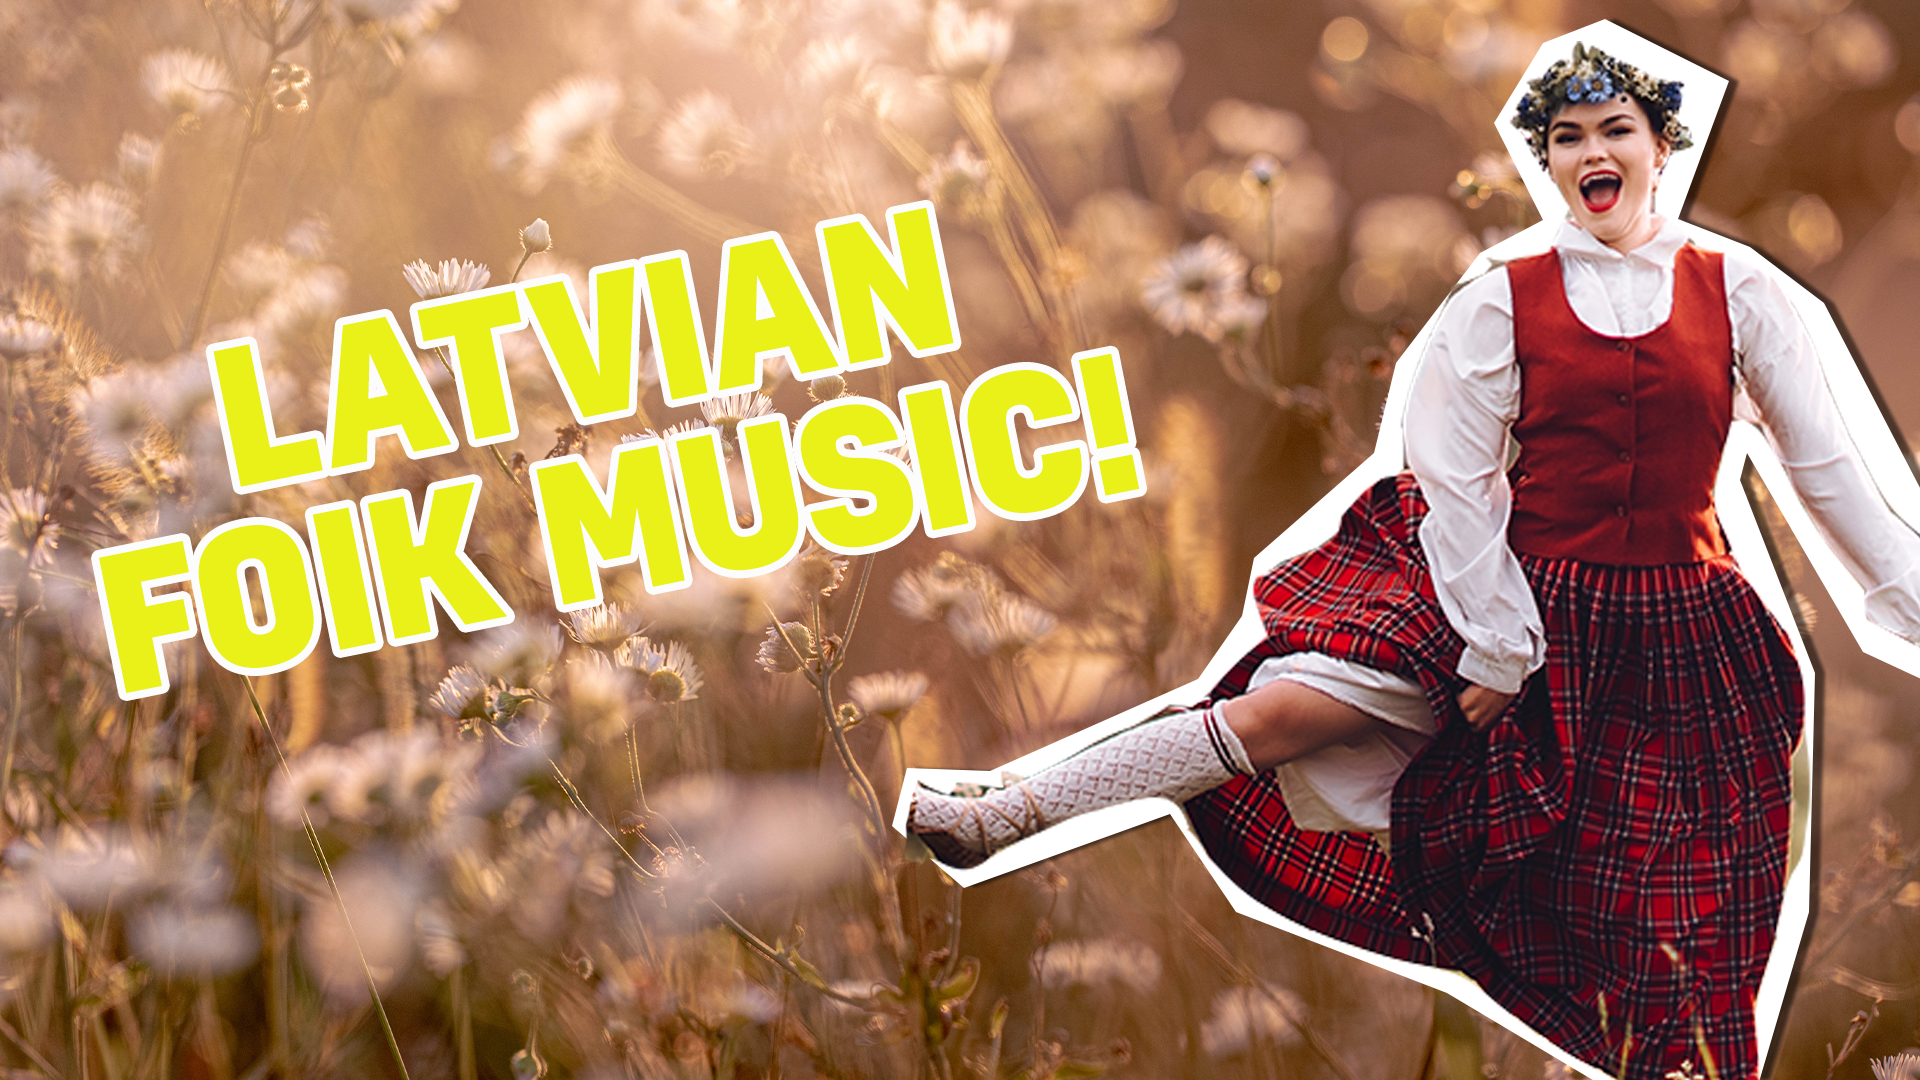 Latvian folk music